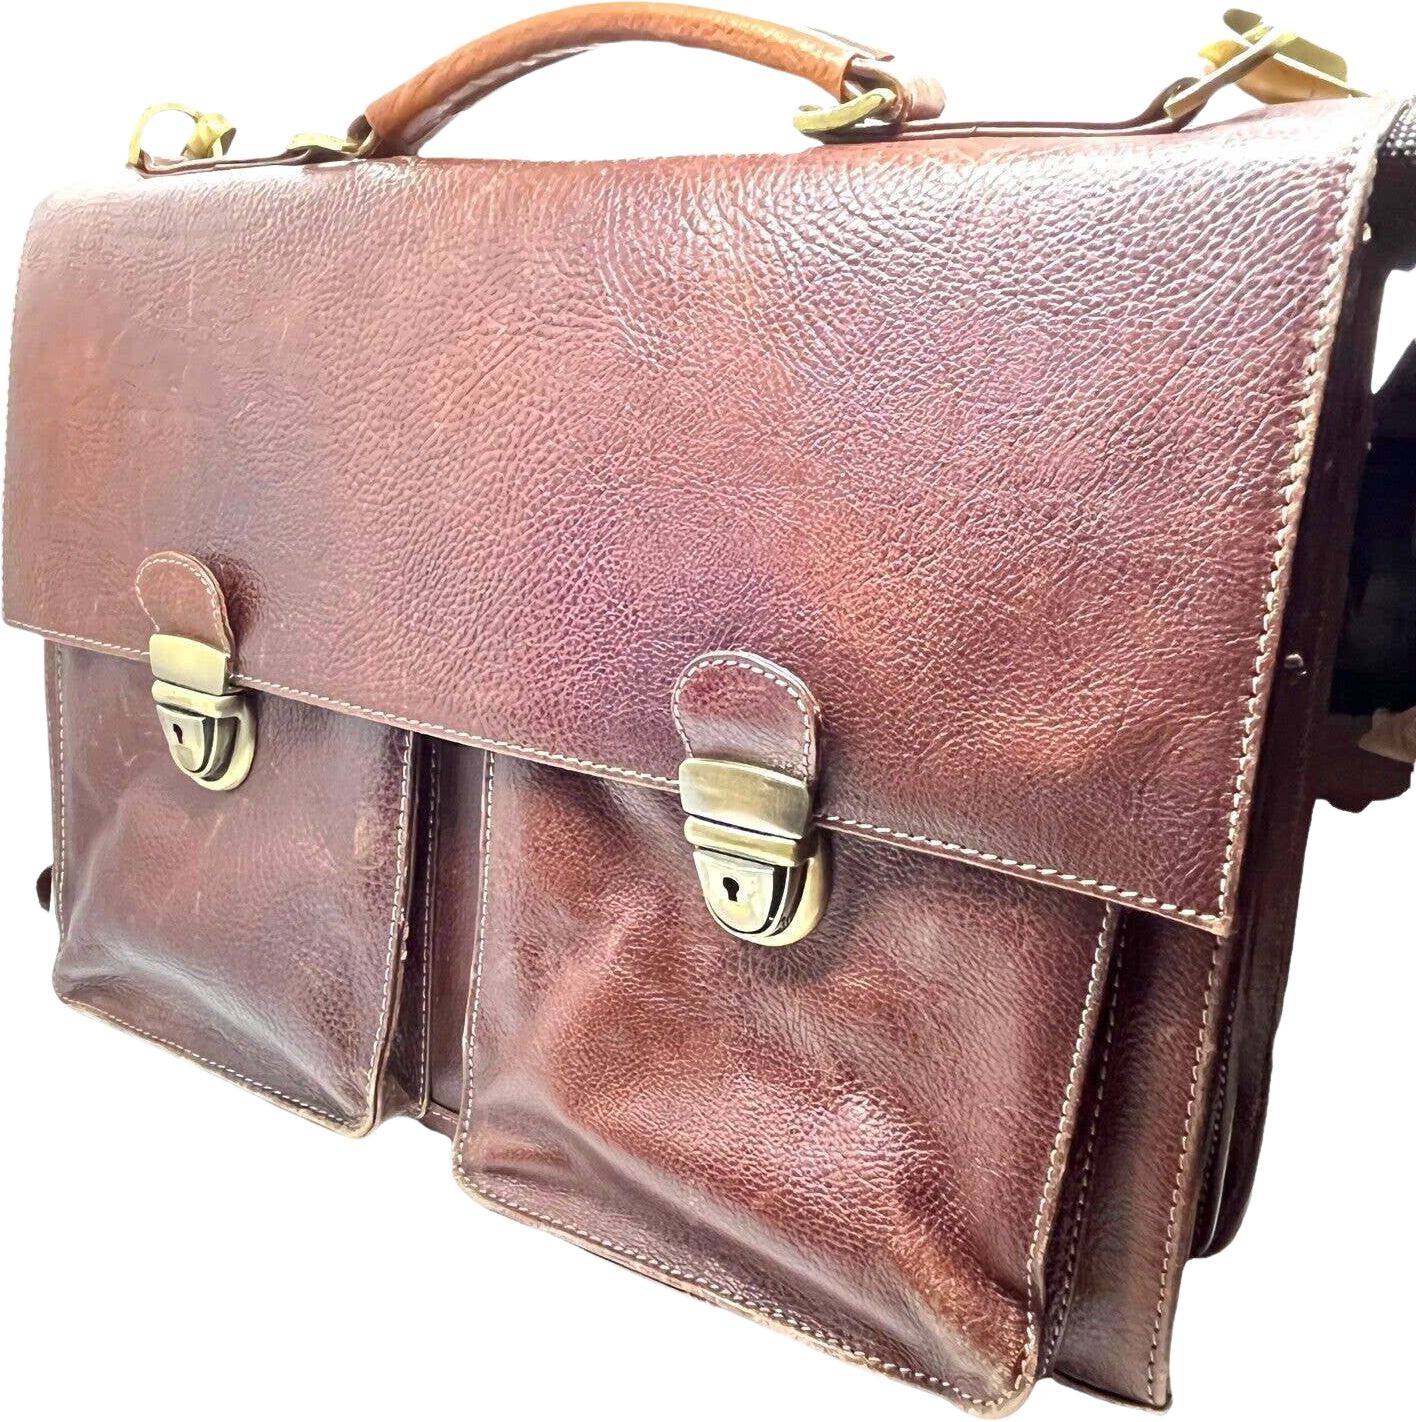 Predator Buffalo Leather Briefcase Satchel Messenger Office Bag (Antique  Brown) – Rustic Town